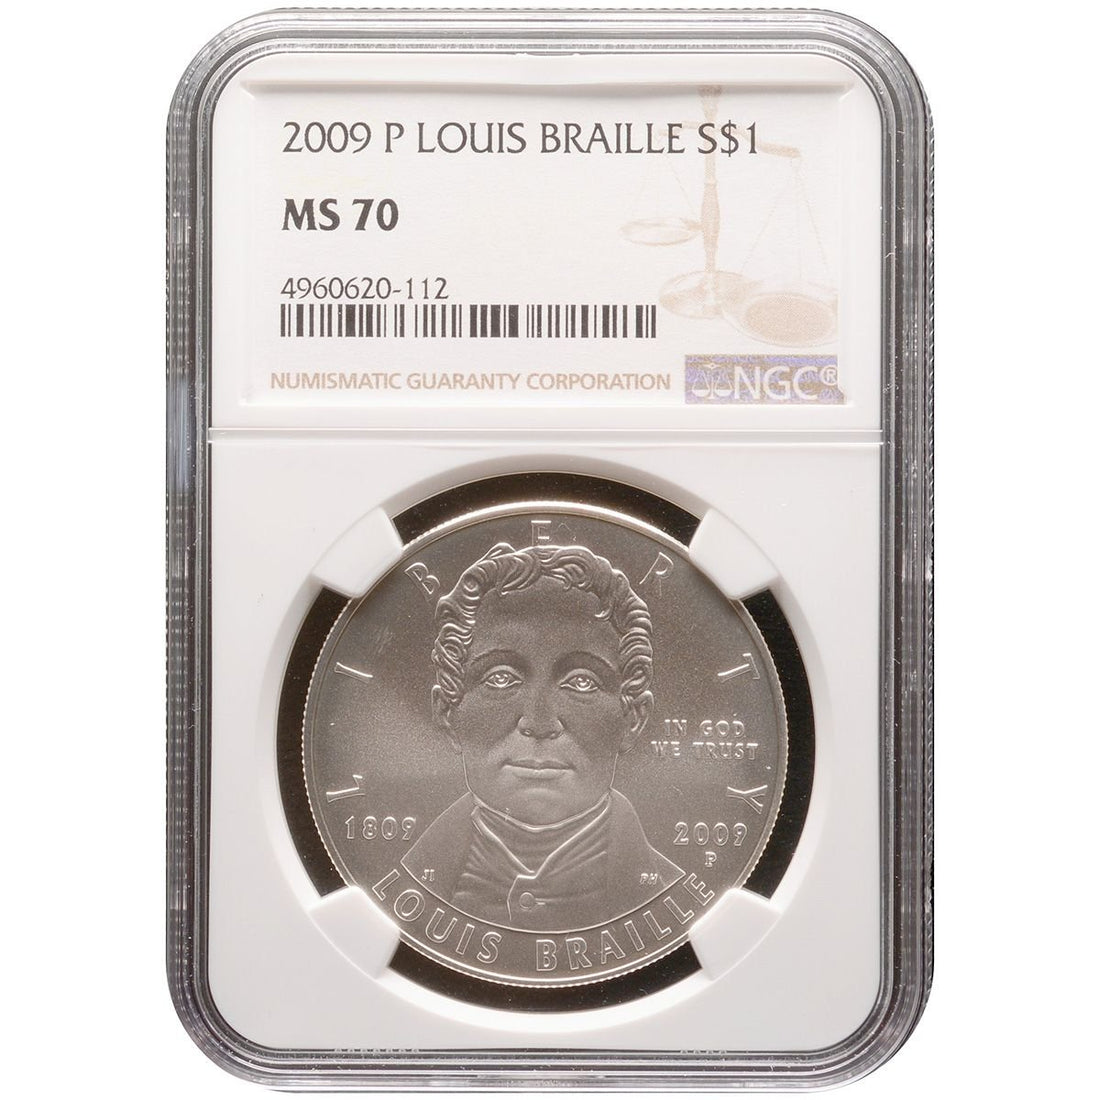 2009 1 oz LOUIS BRAILLE Silver Coin MS 70 - OZB